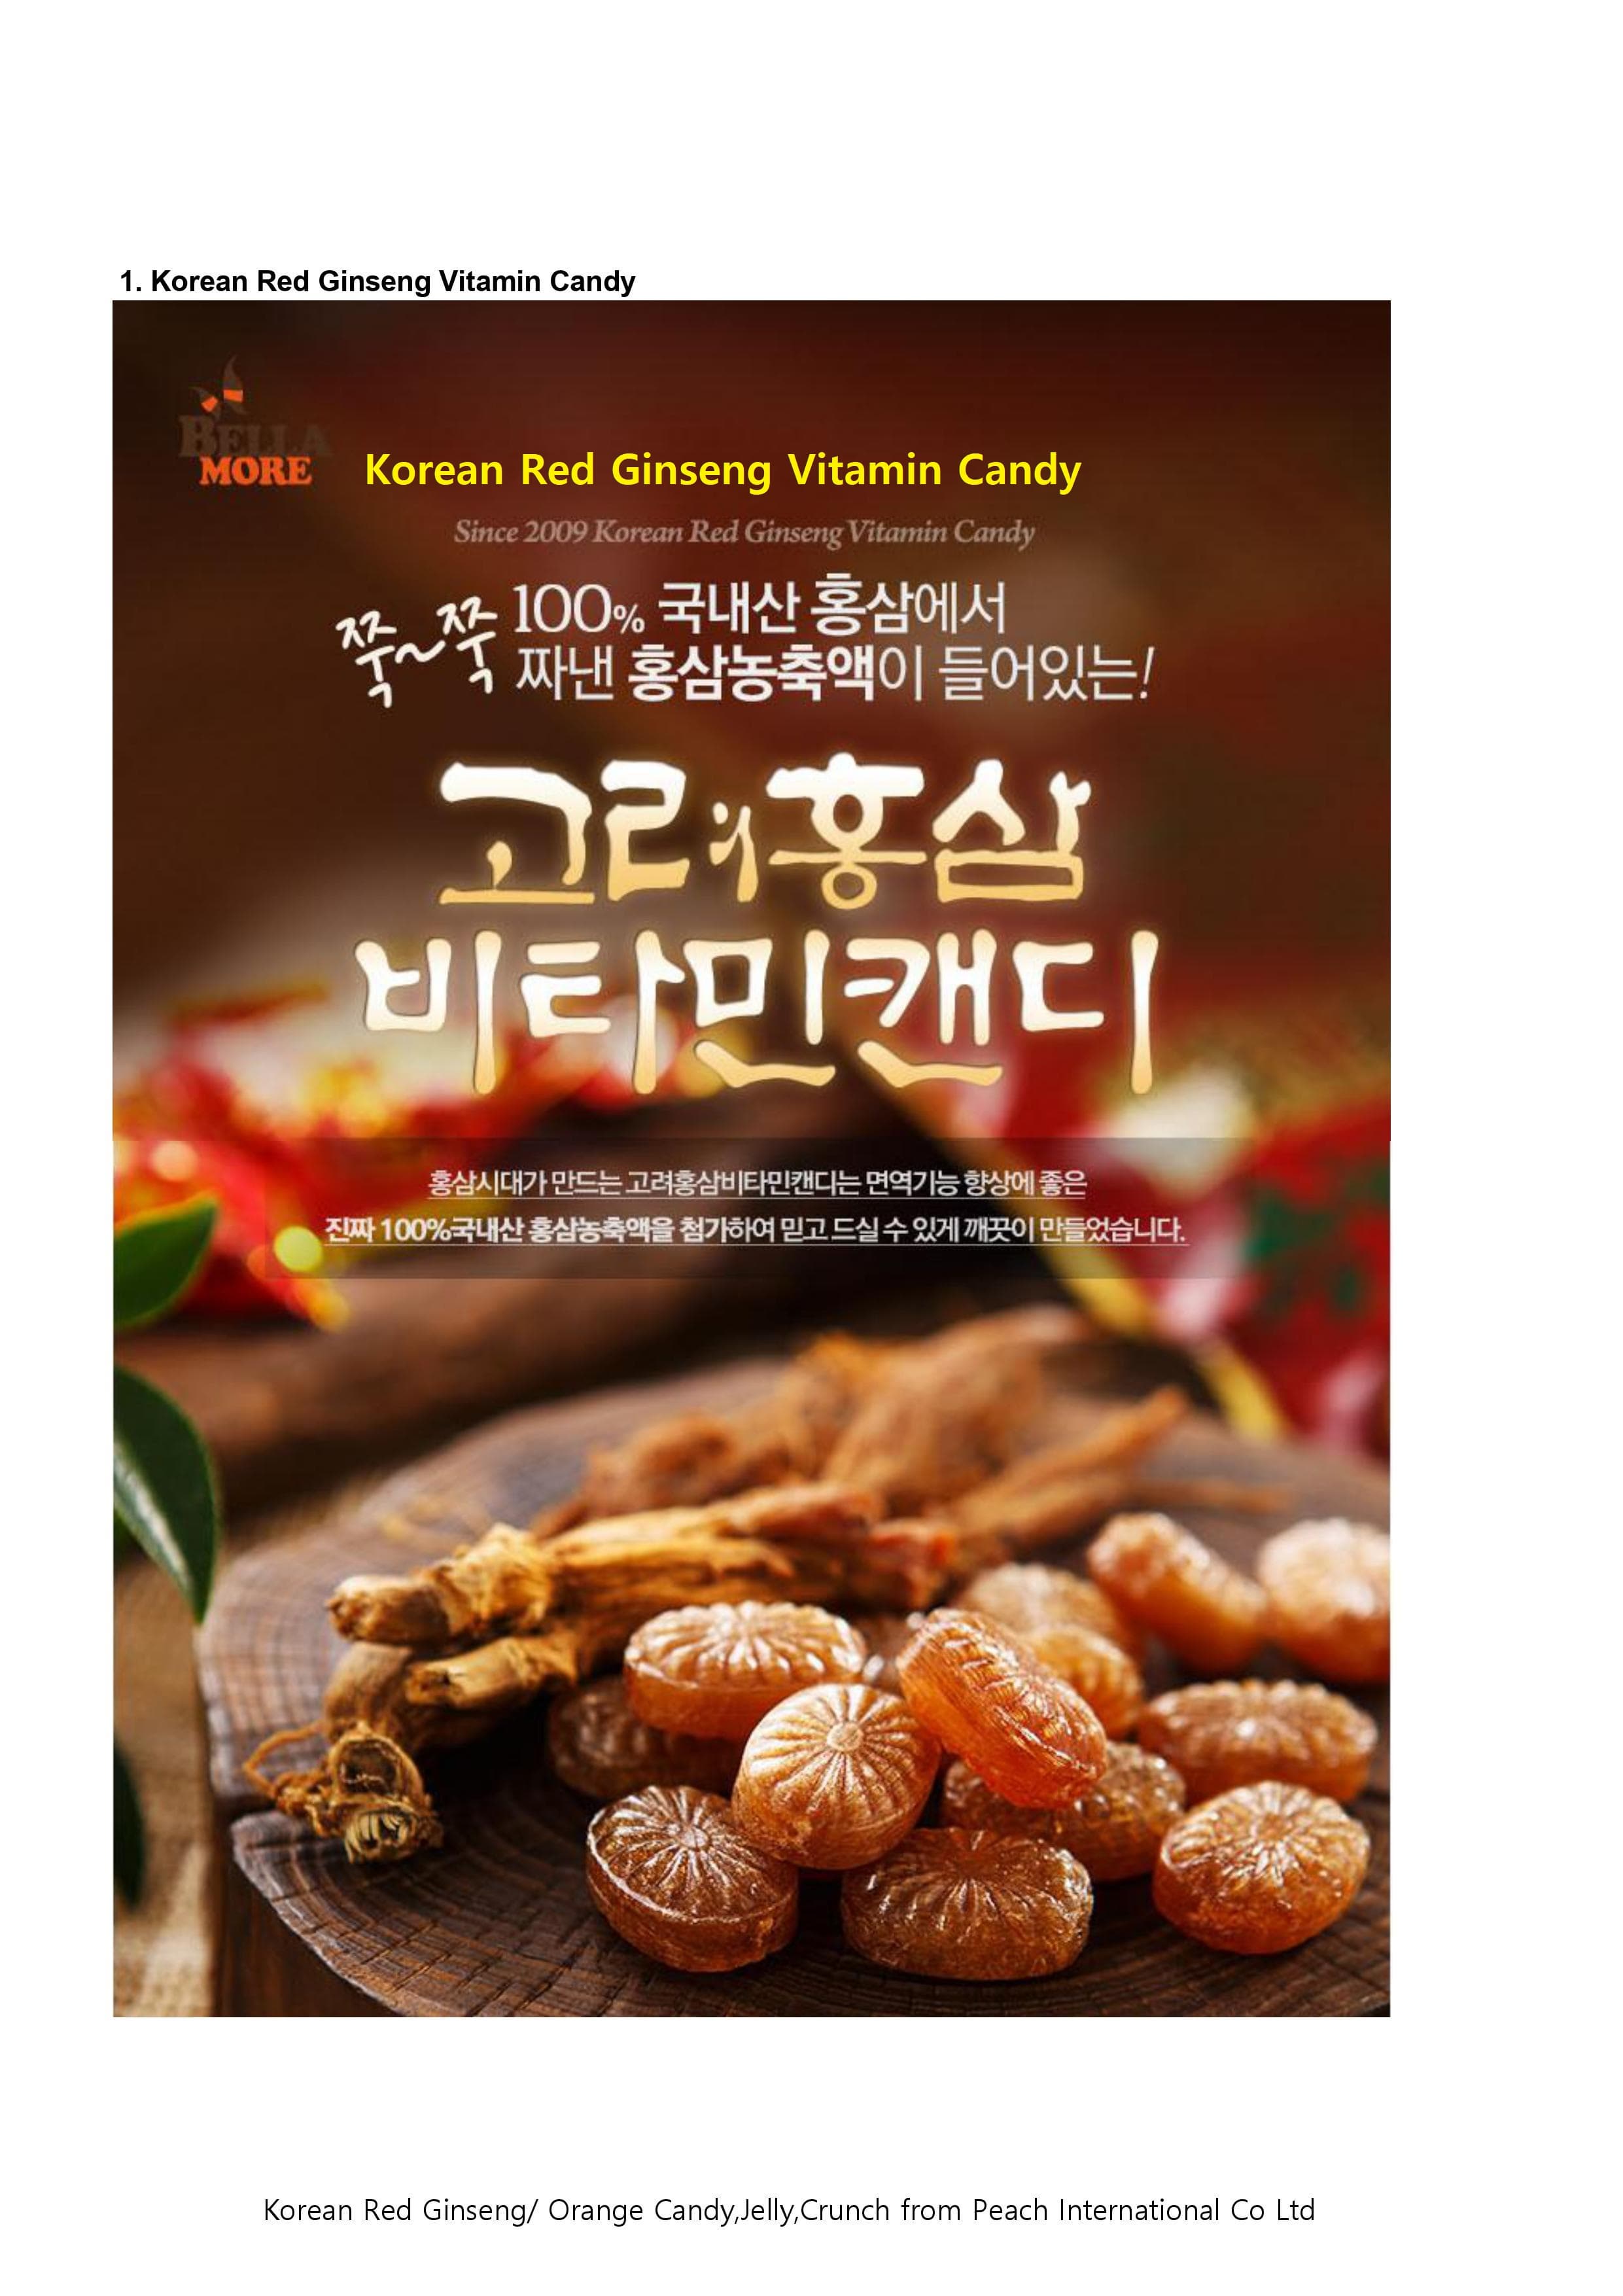 Korea Red Ginseng Vitamin Candy